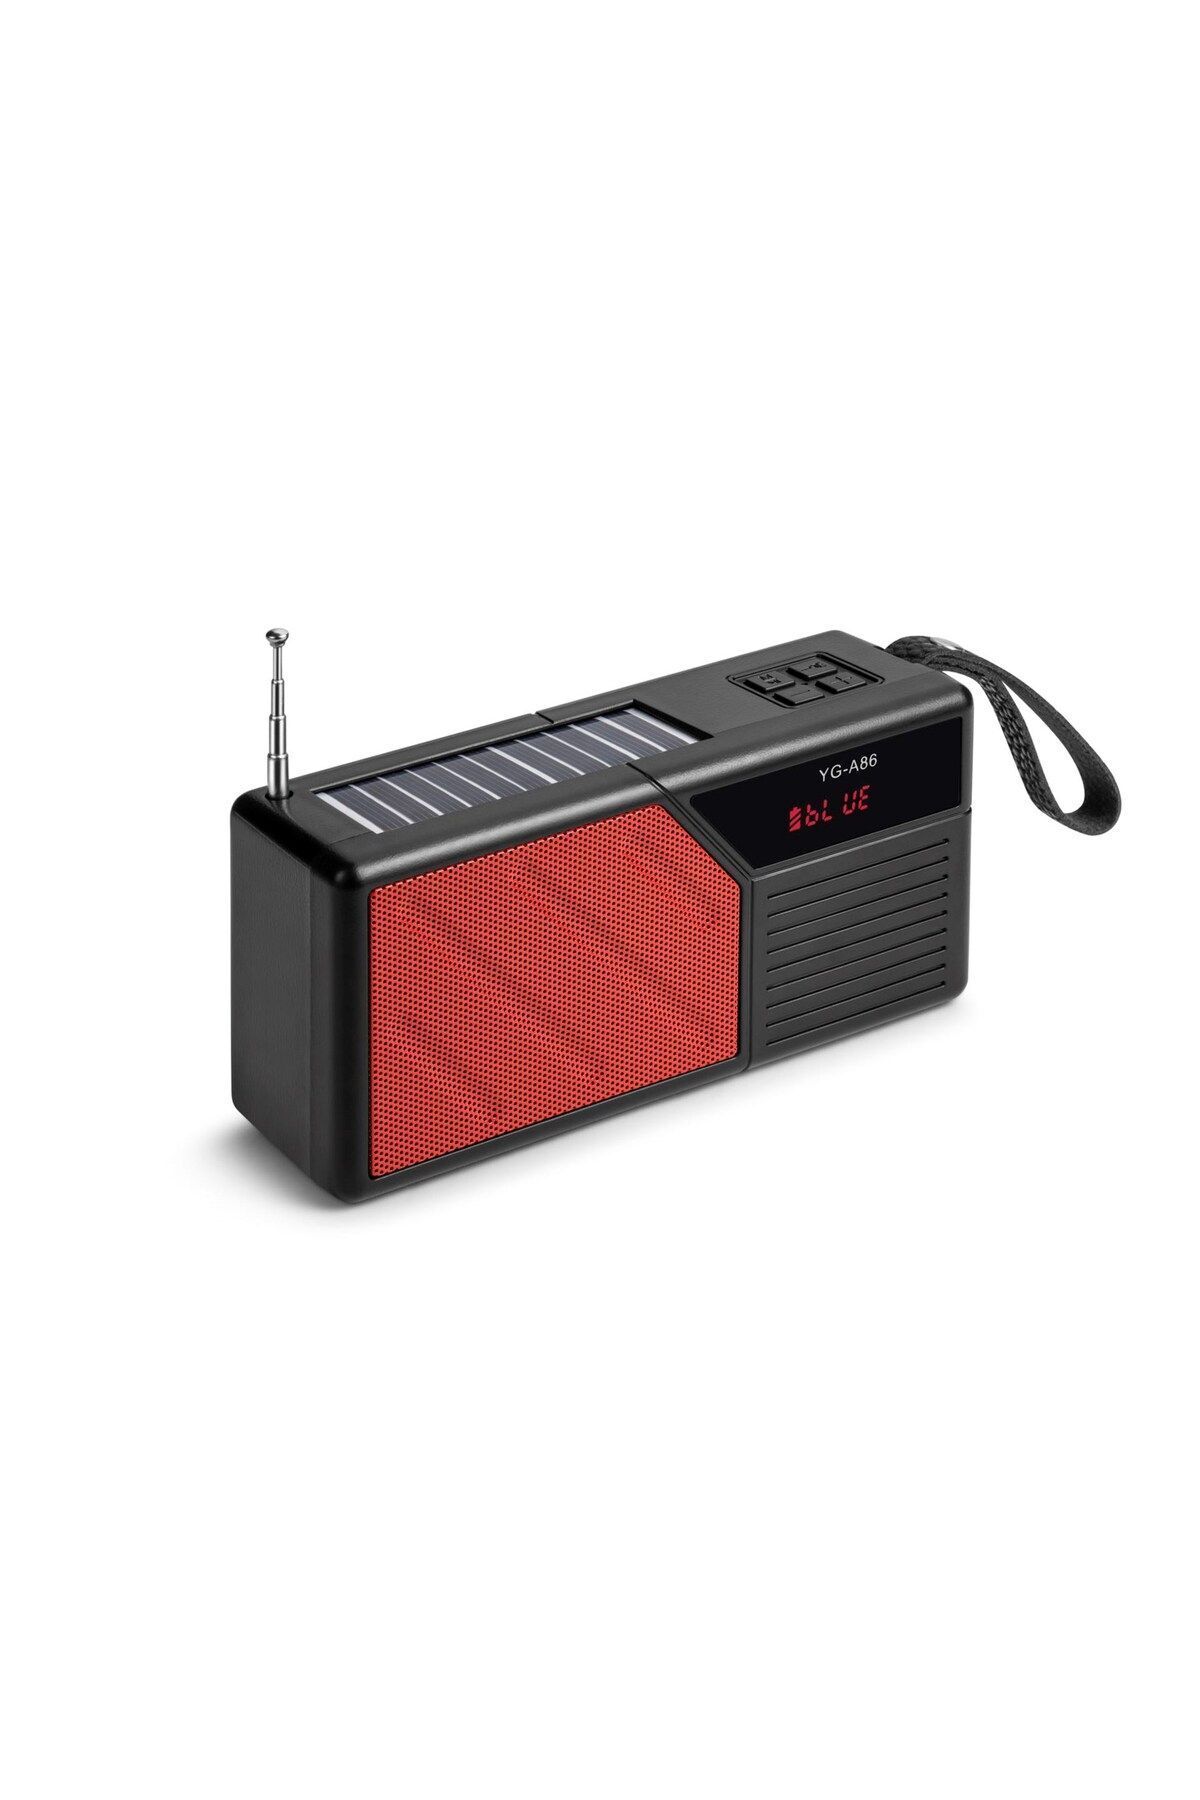 WASHA Solar Güneş Enerji Dijital Ekran FM Radyo Fenerli Bluetooth Hoparlör